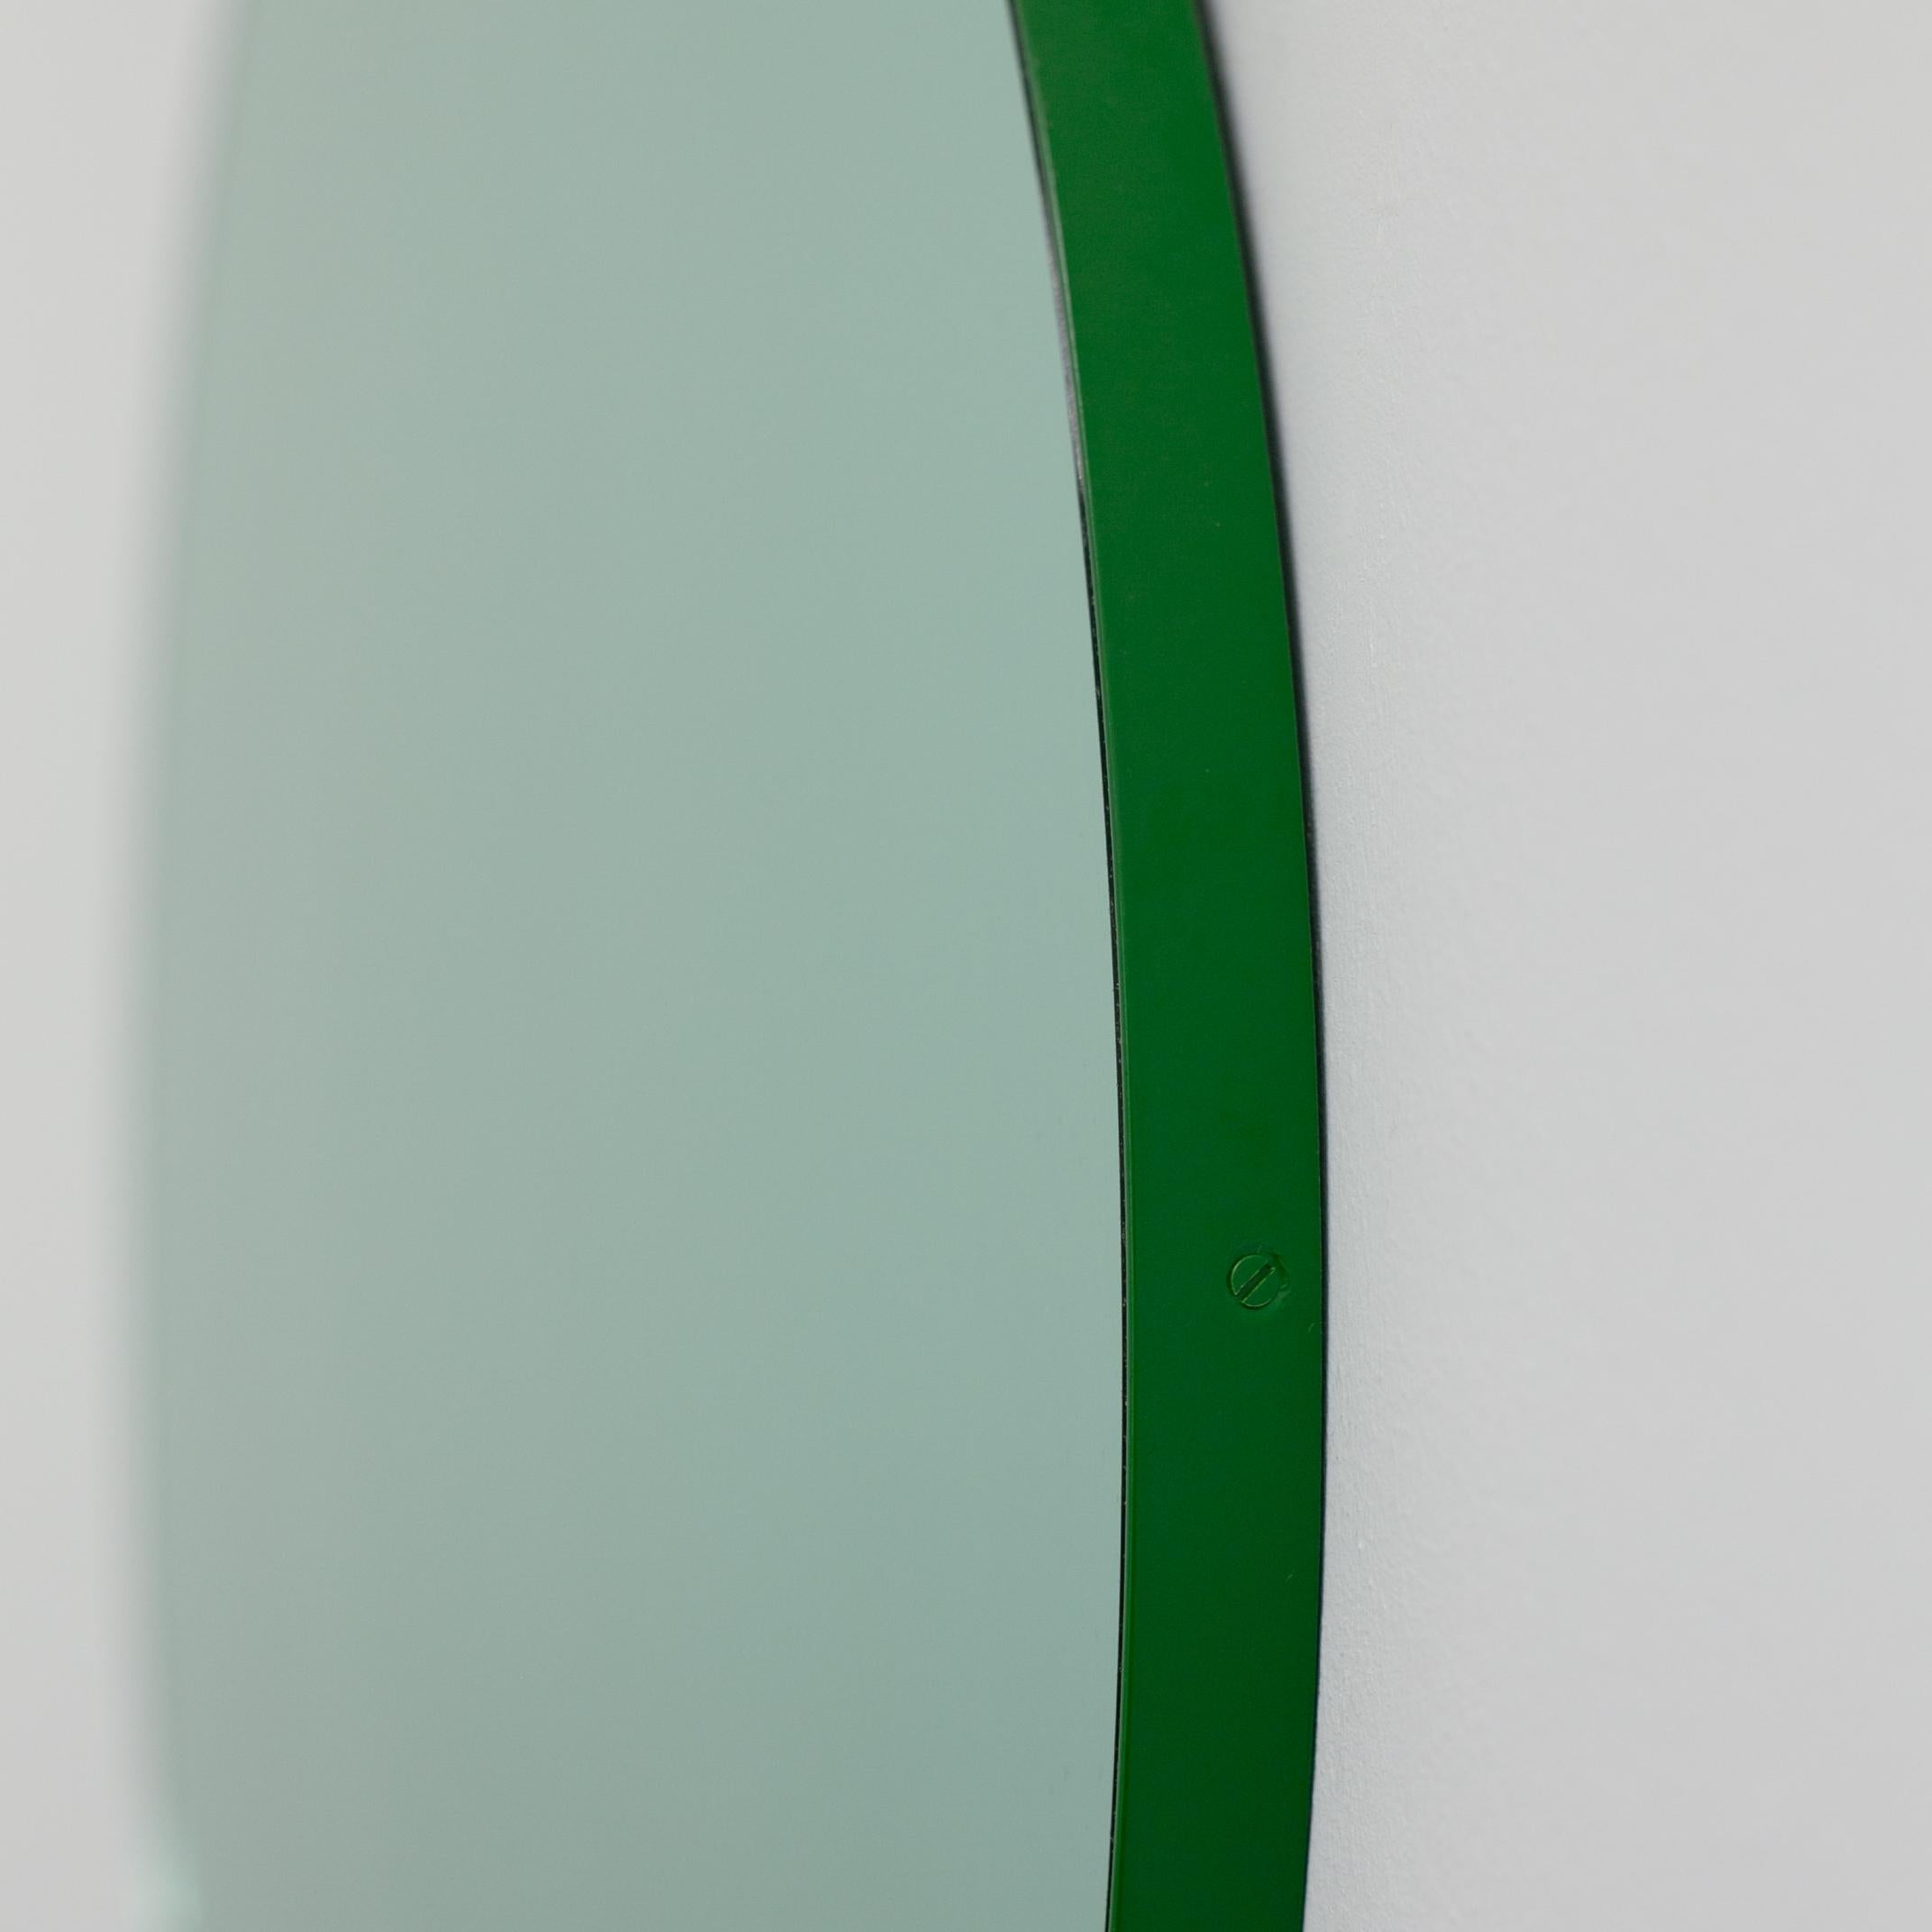 Contemporary Orbis Green Tinted Modern Round Mirror with Green Frame - Medium